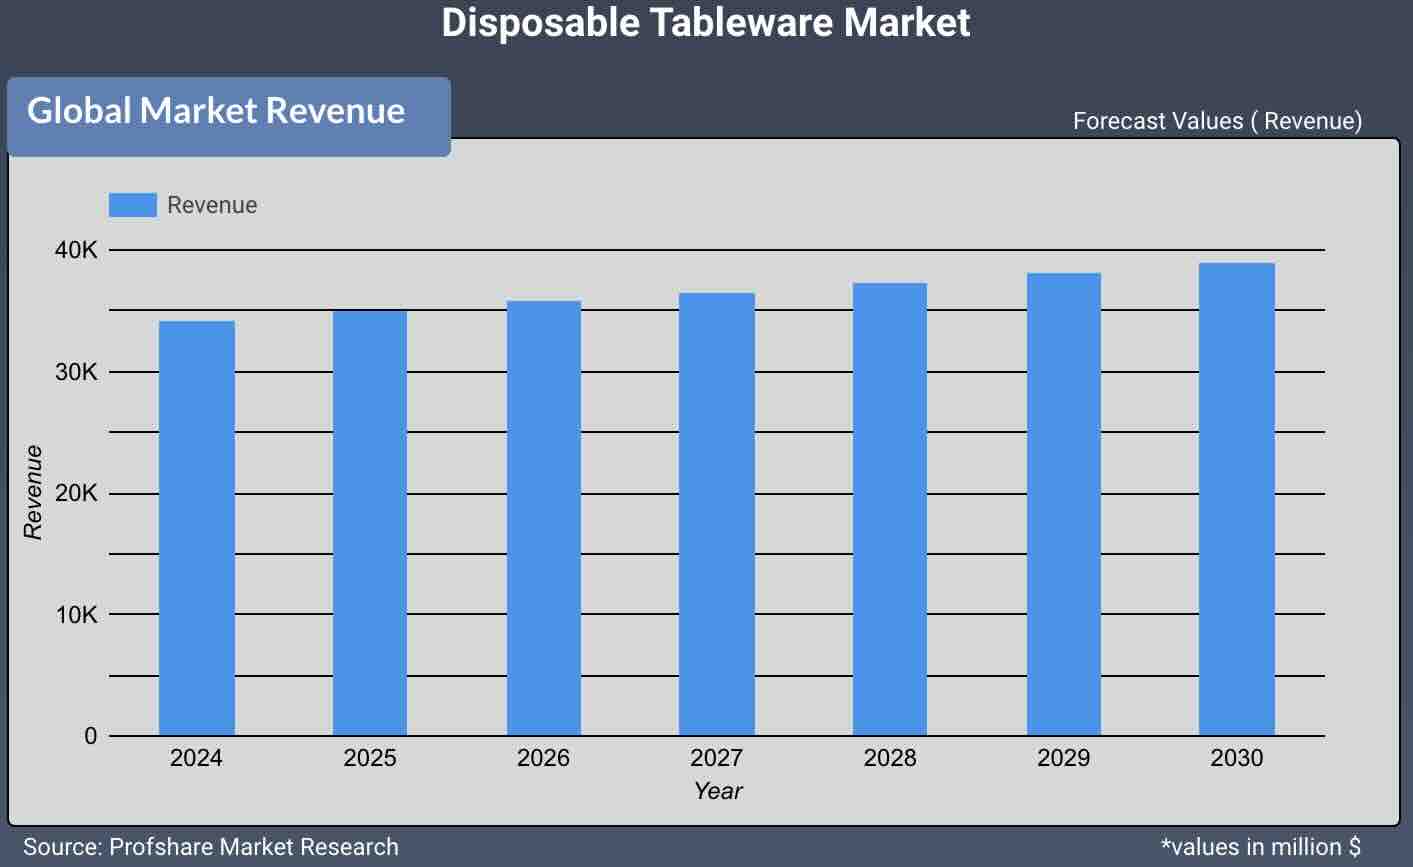 Disposable Tableware Market